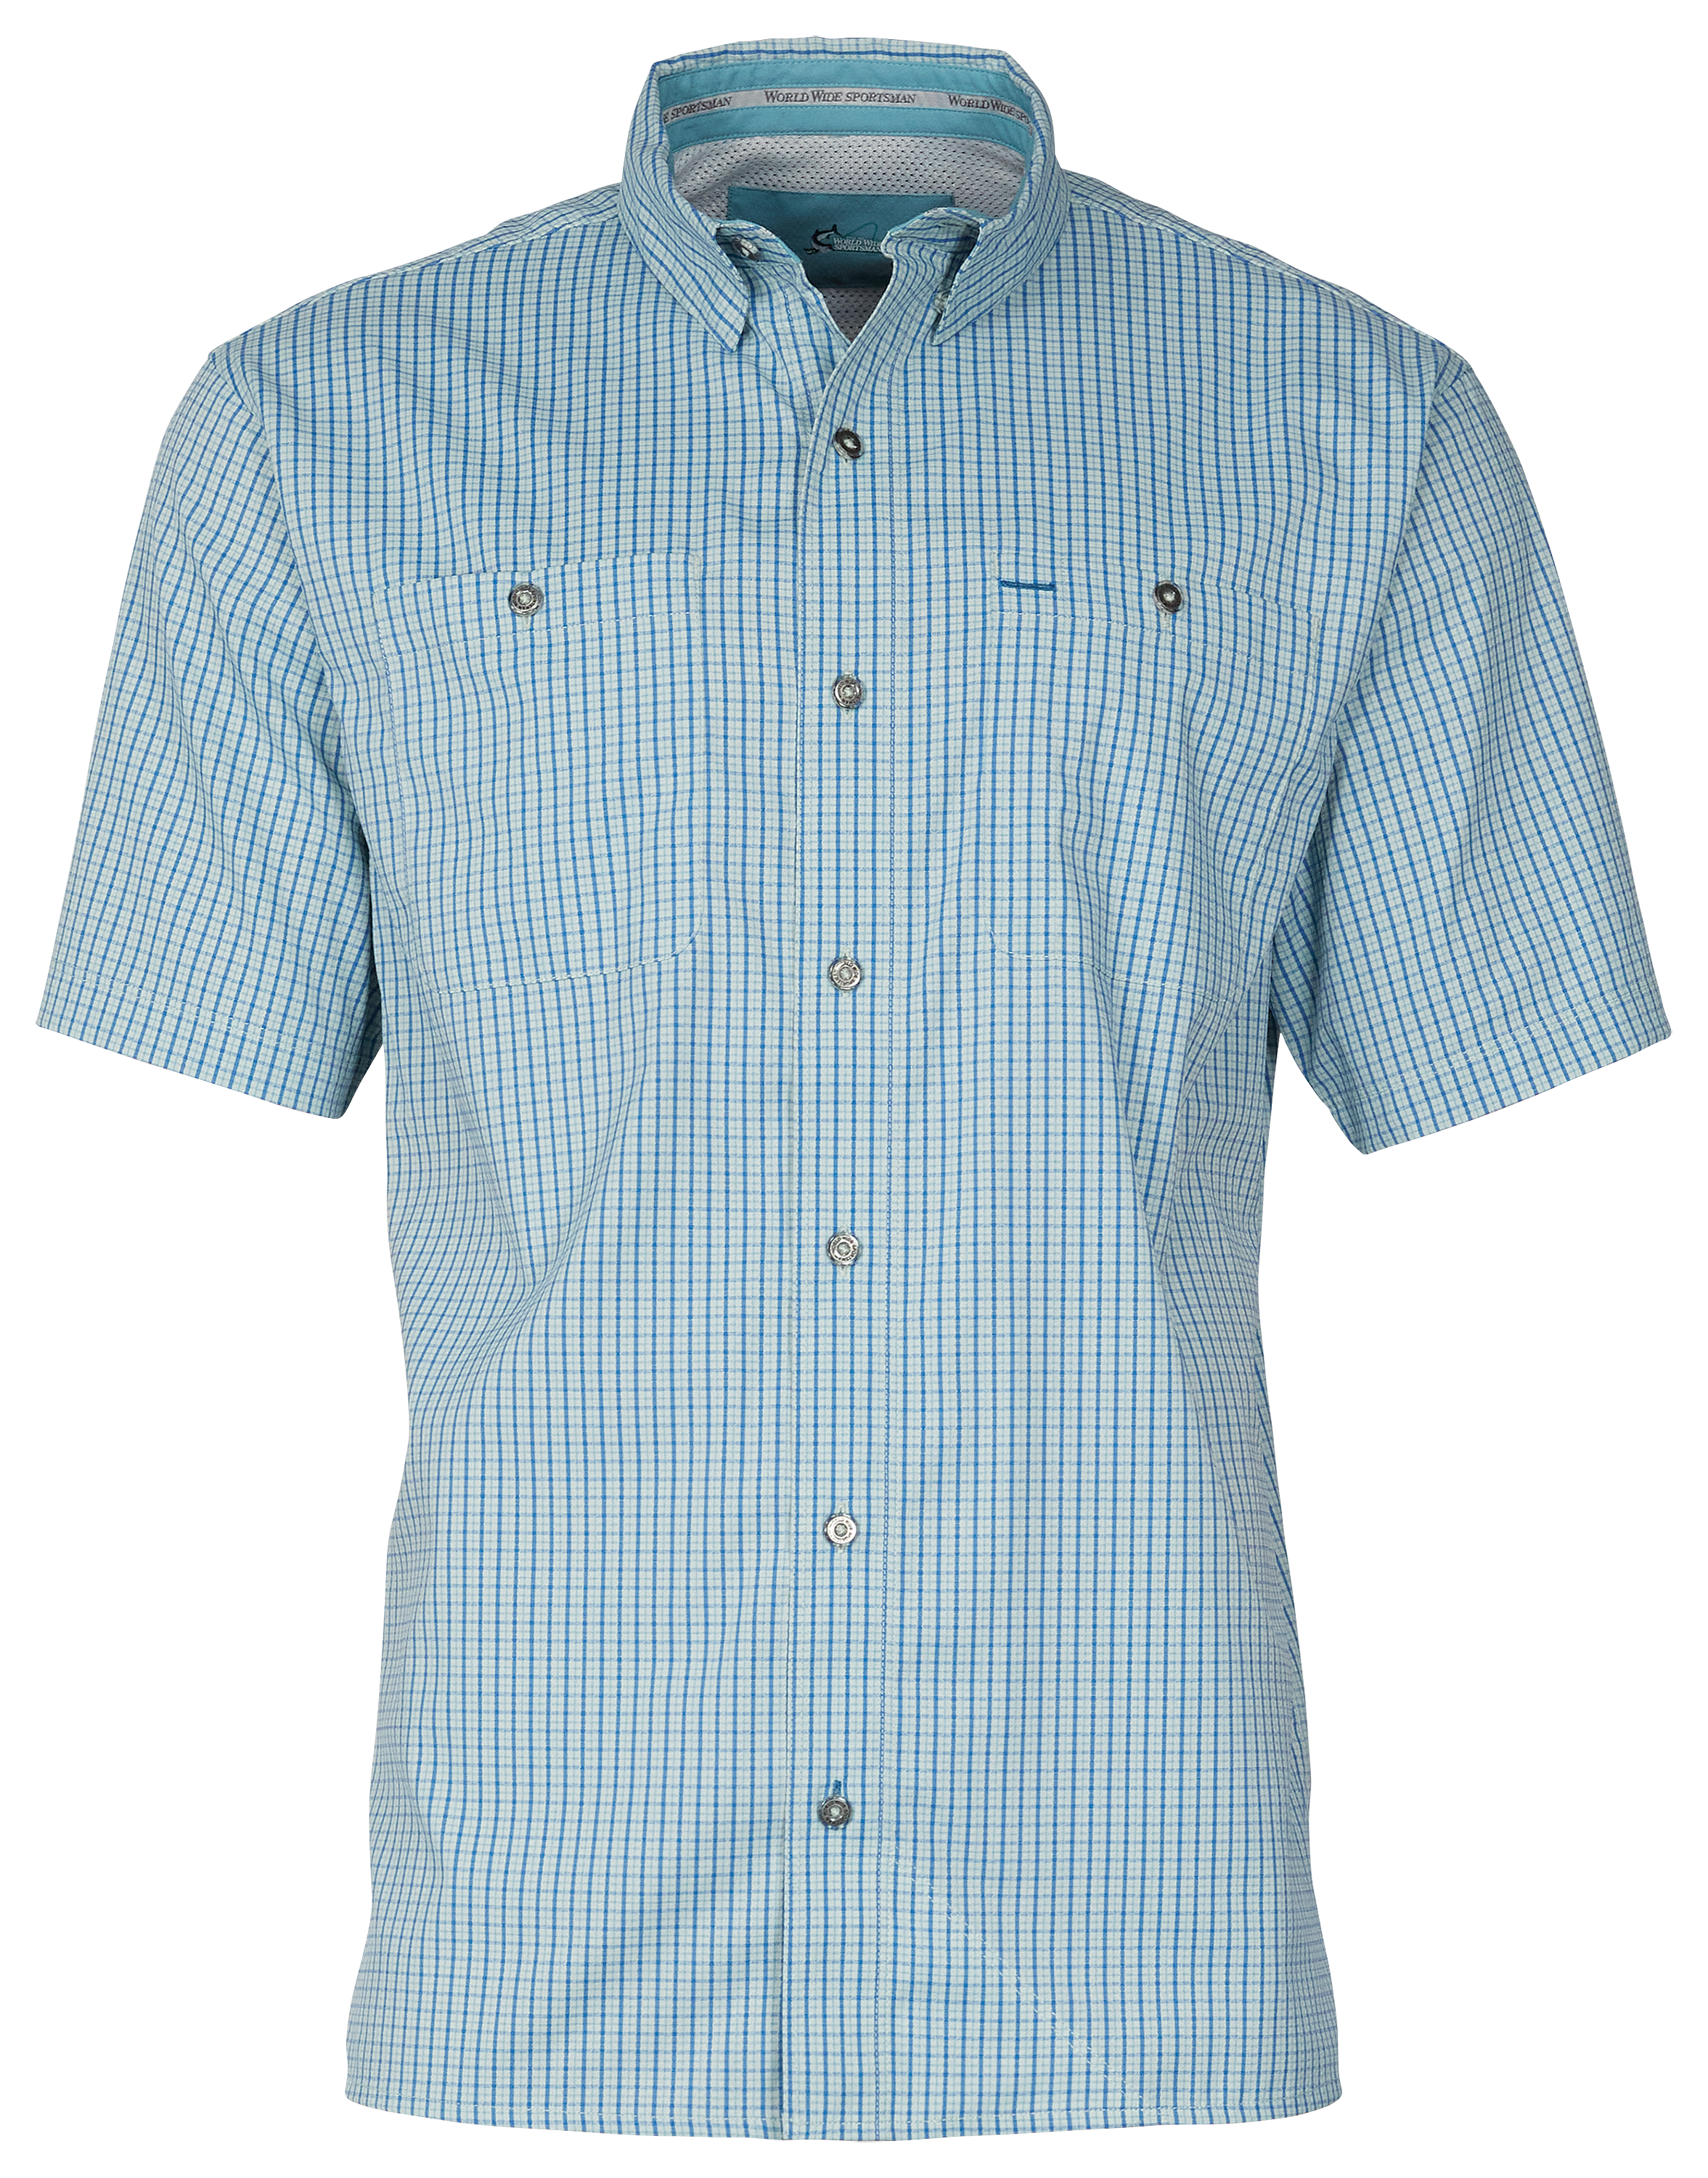 World Wide Sportsman Ultimate Angler Plaid Short-Sleeve Shirt for Men - Blue Glass Tattersall - M